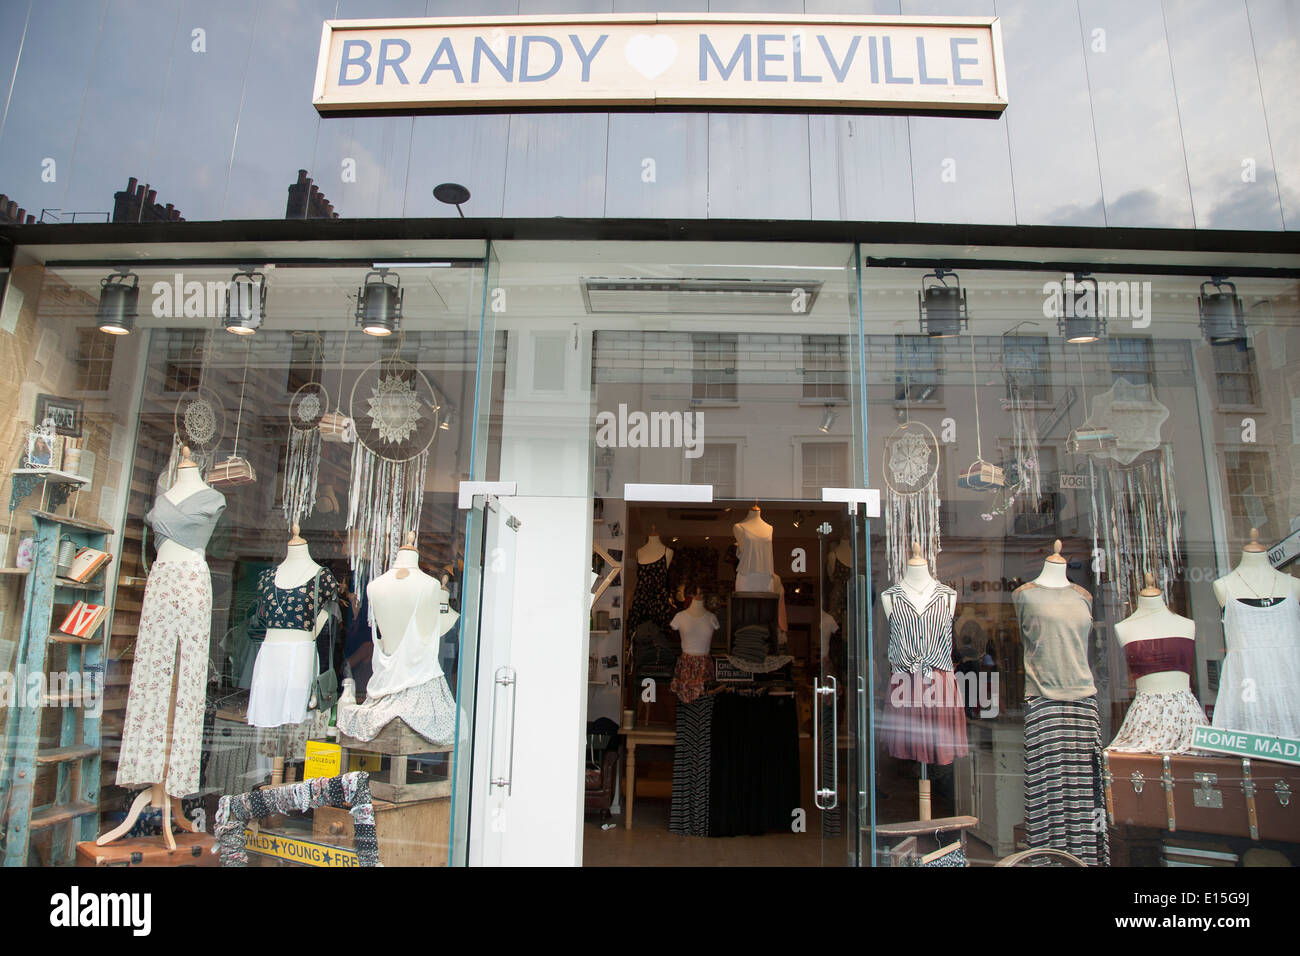 Brandy Melville Shop; Kings Road; Chelsea; London; England; UK  Stockfotografie - Alamy